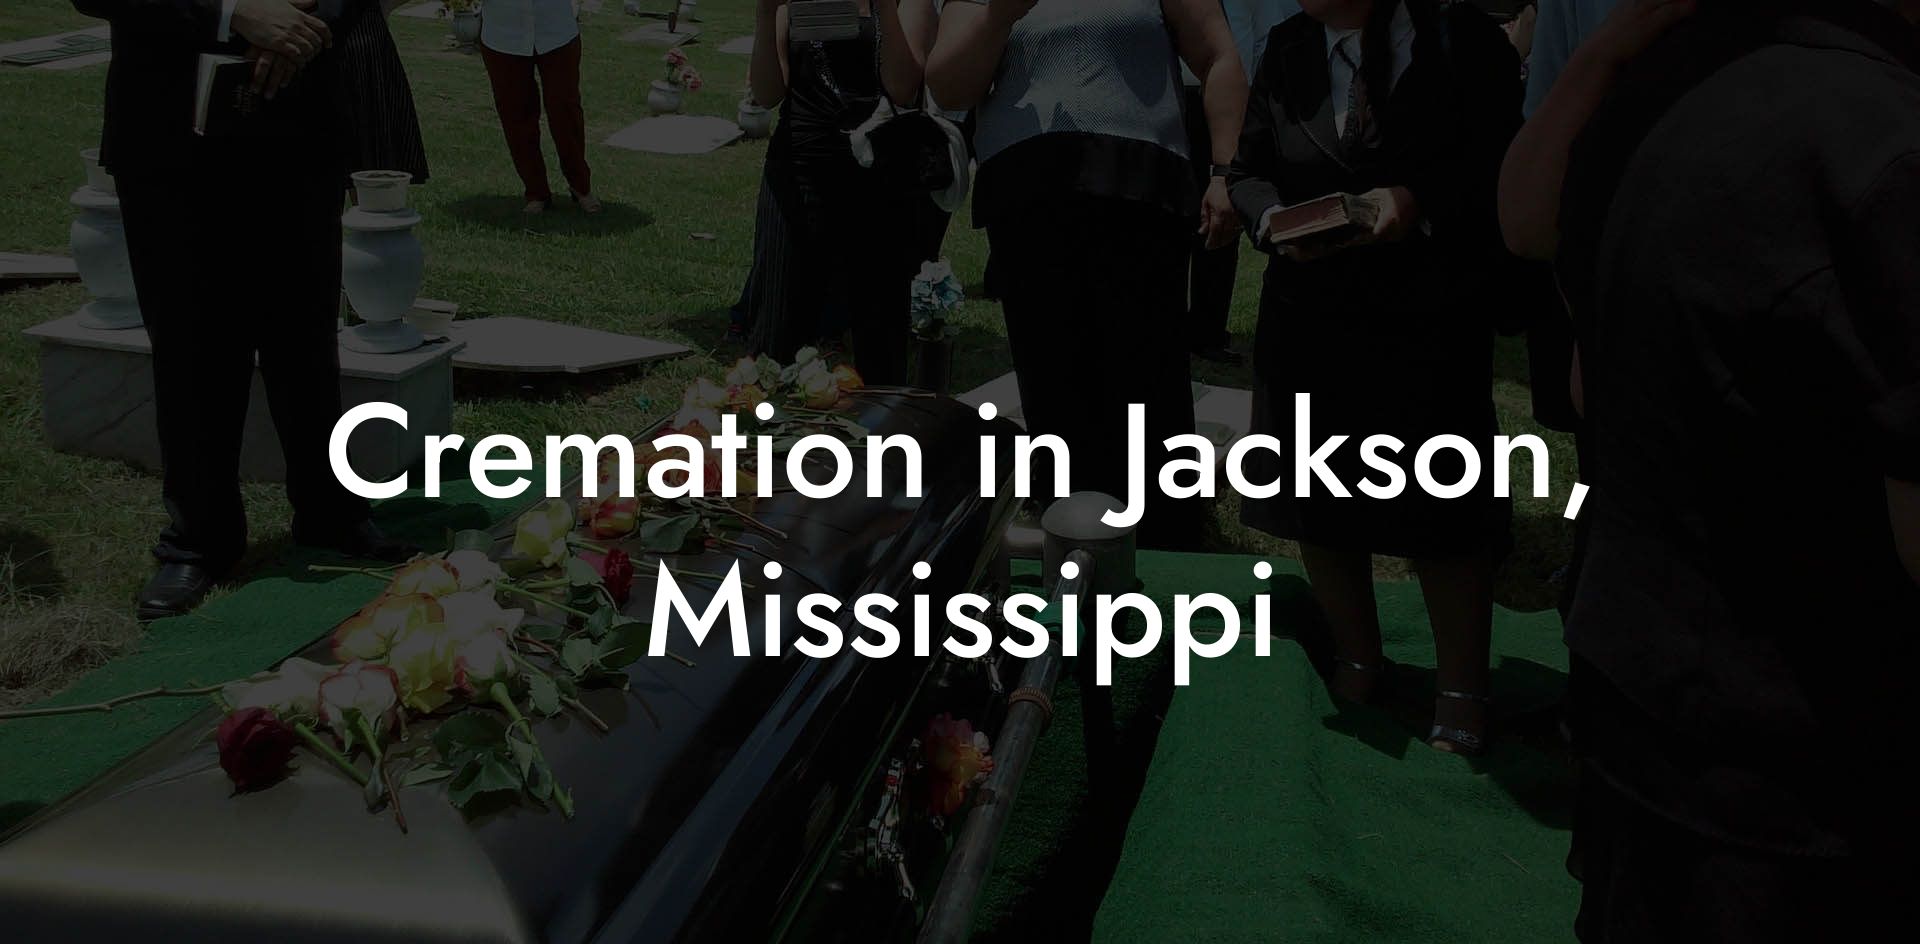 Cremation in Jackson, Mississippi